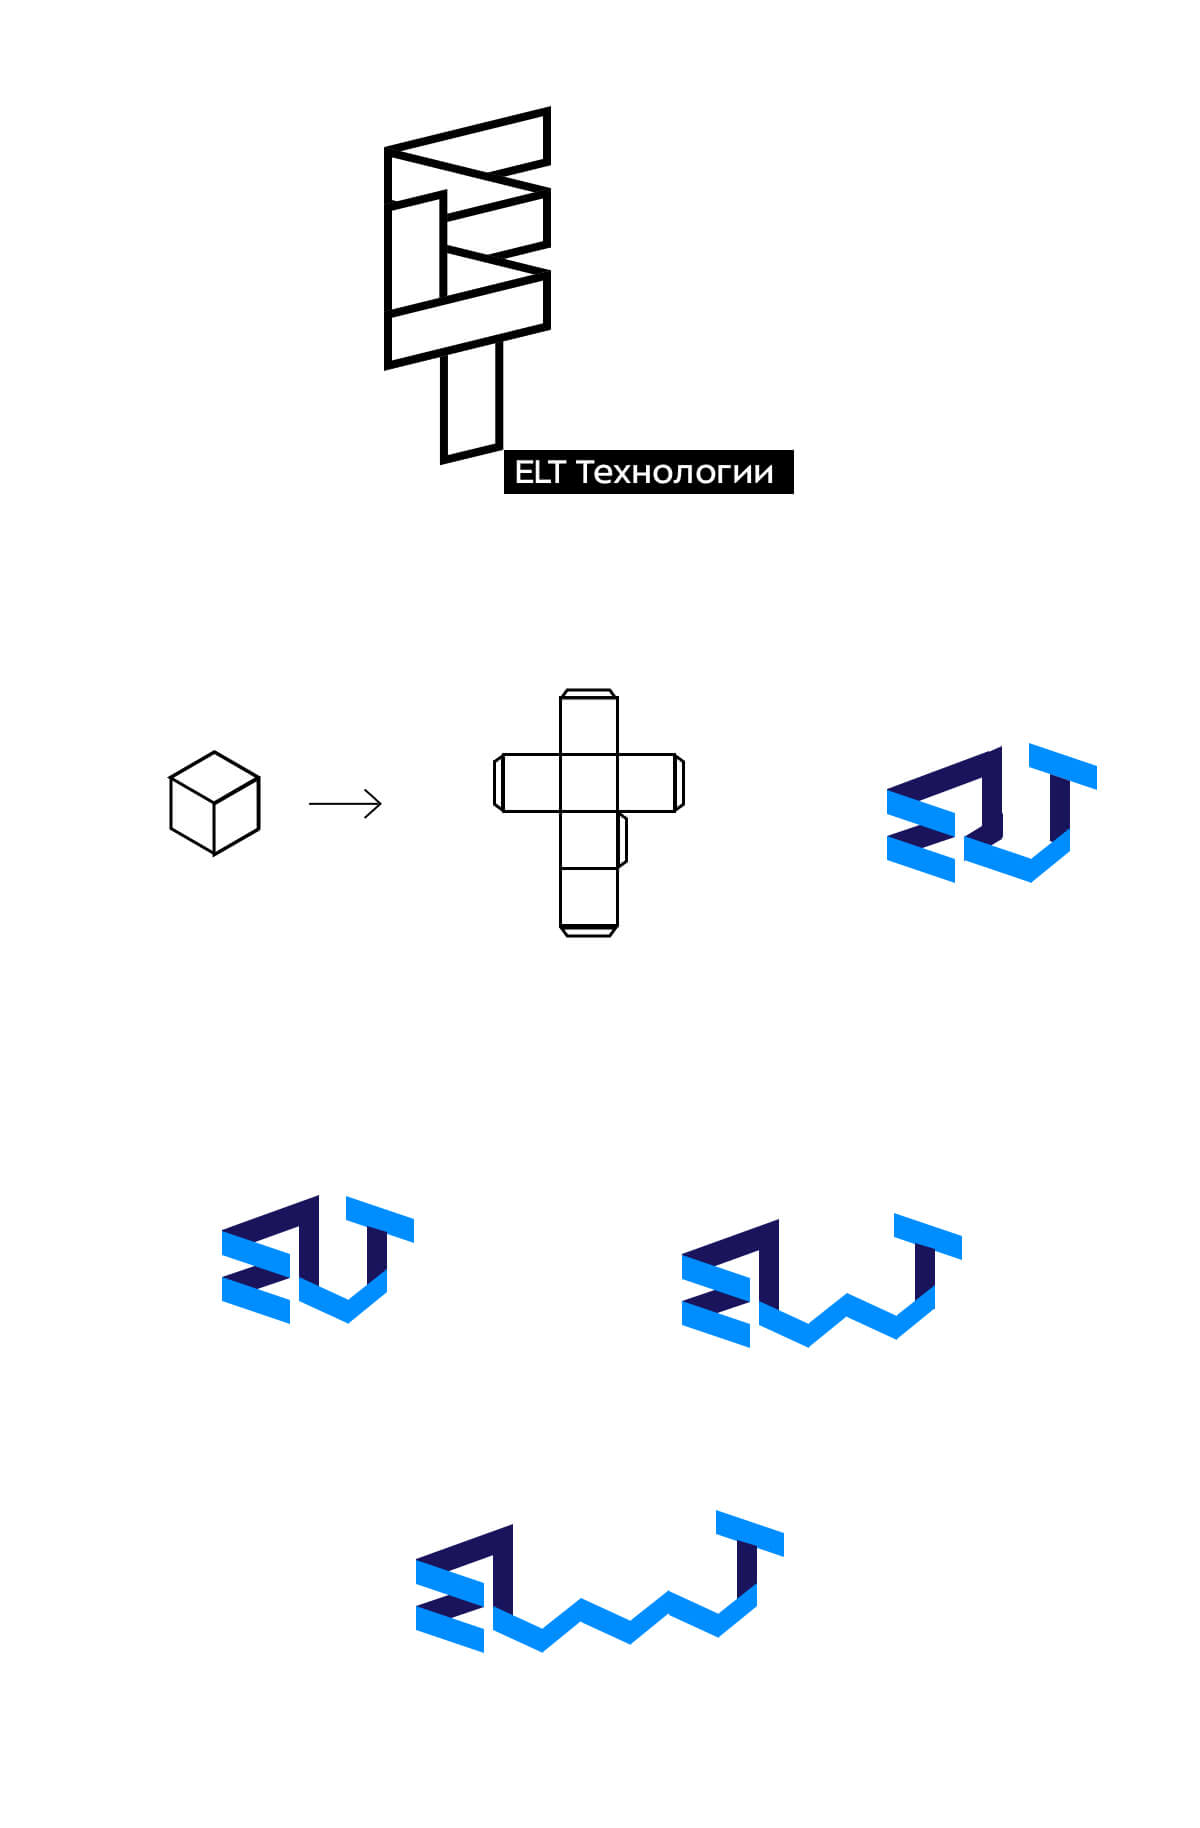 elt logo process 08